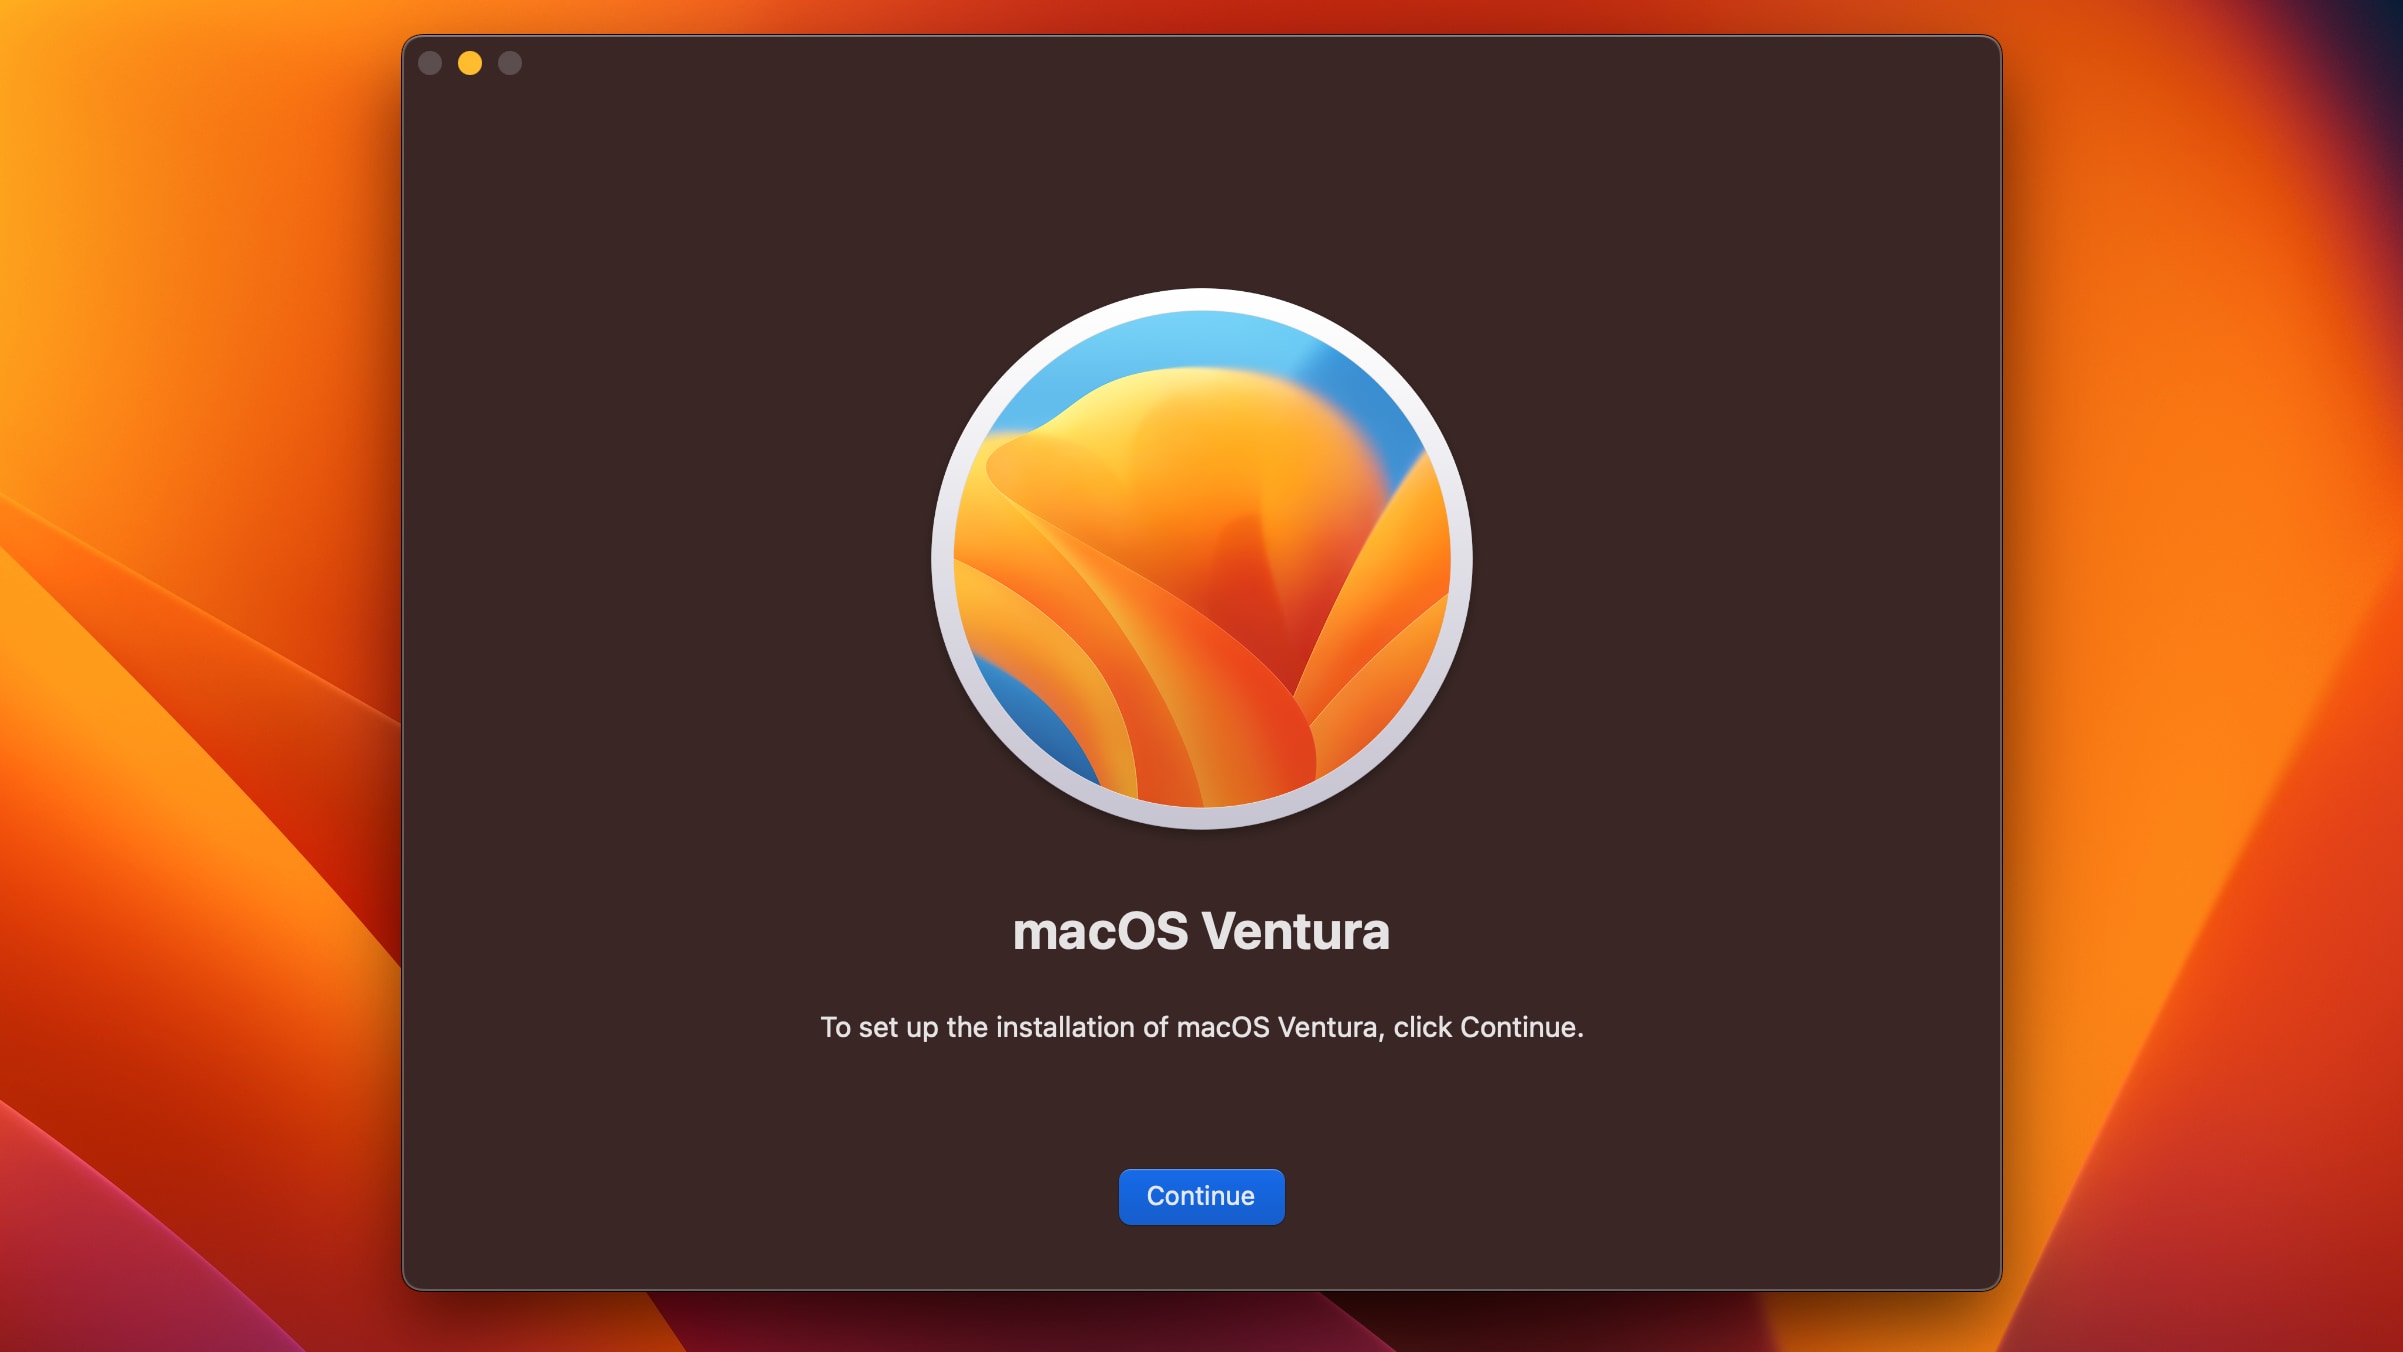 Splash screen in Apple's macOS Ventura installer